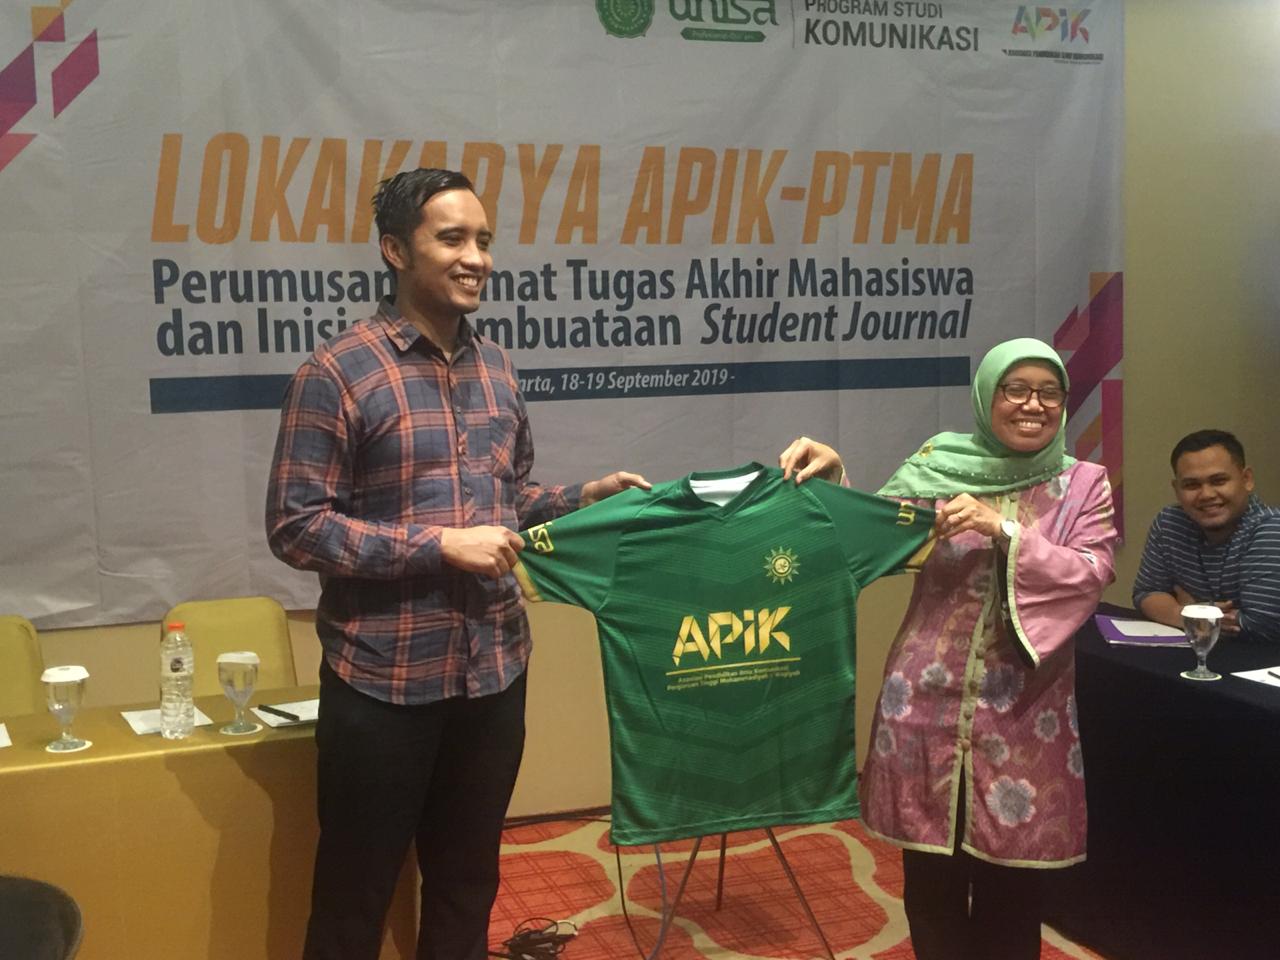 Prodi Komunikasi bersama APIK PTMA Gelar Lokakarya Format Tugas Akhir Mahasiswa